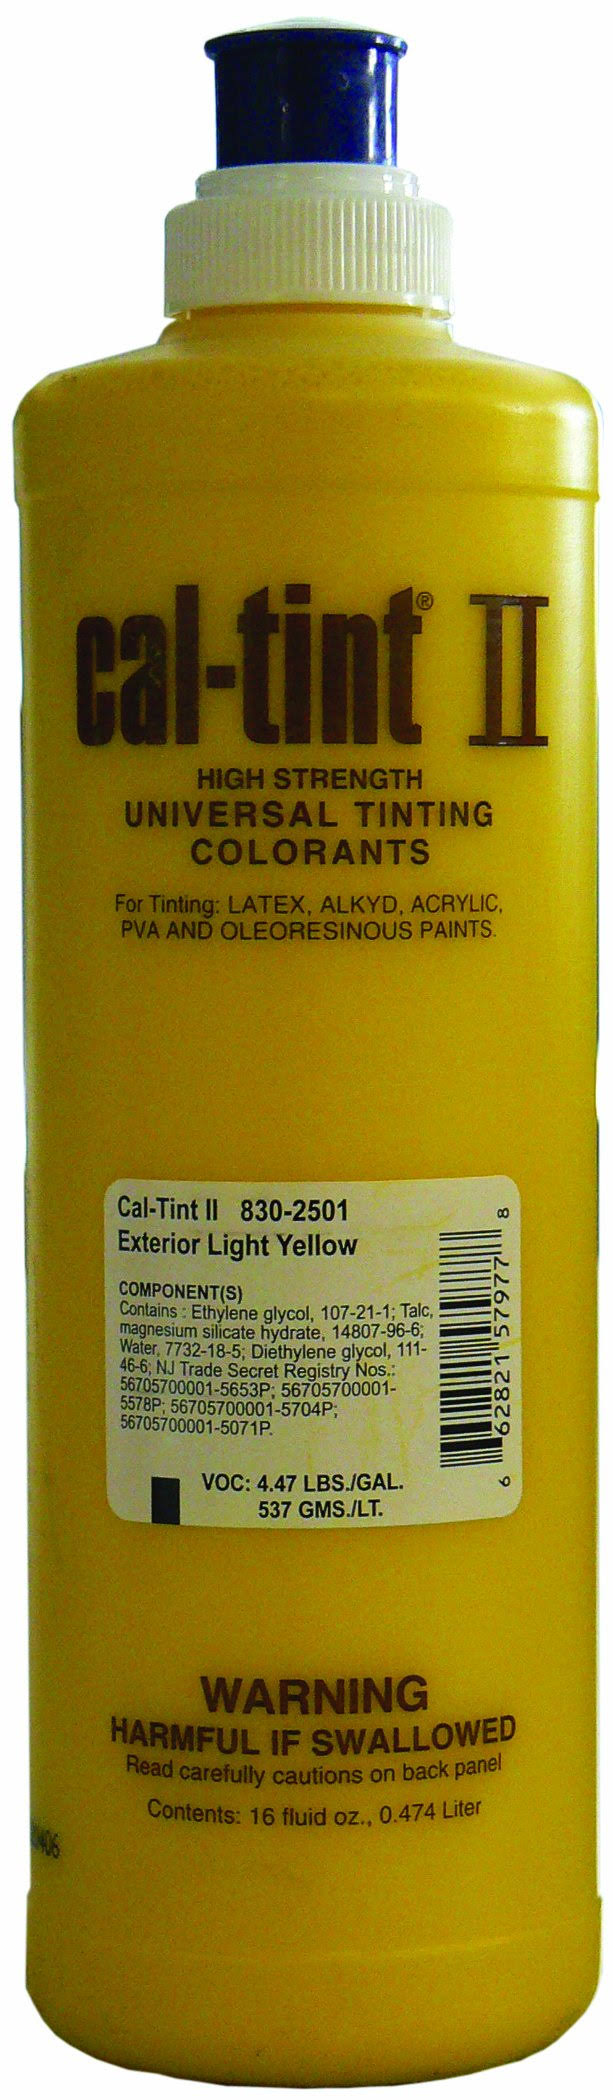 Chromaflo 830-2501 Cal-Tint II 16-Ounce Colorants Light Yellow